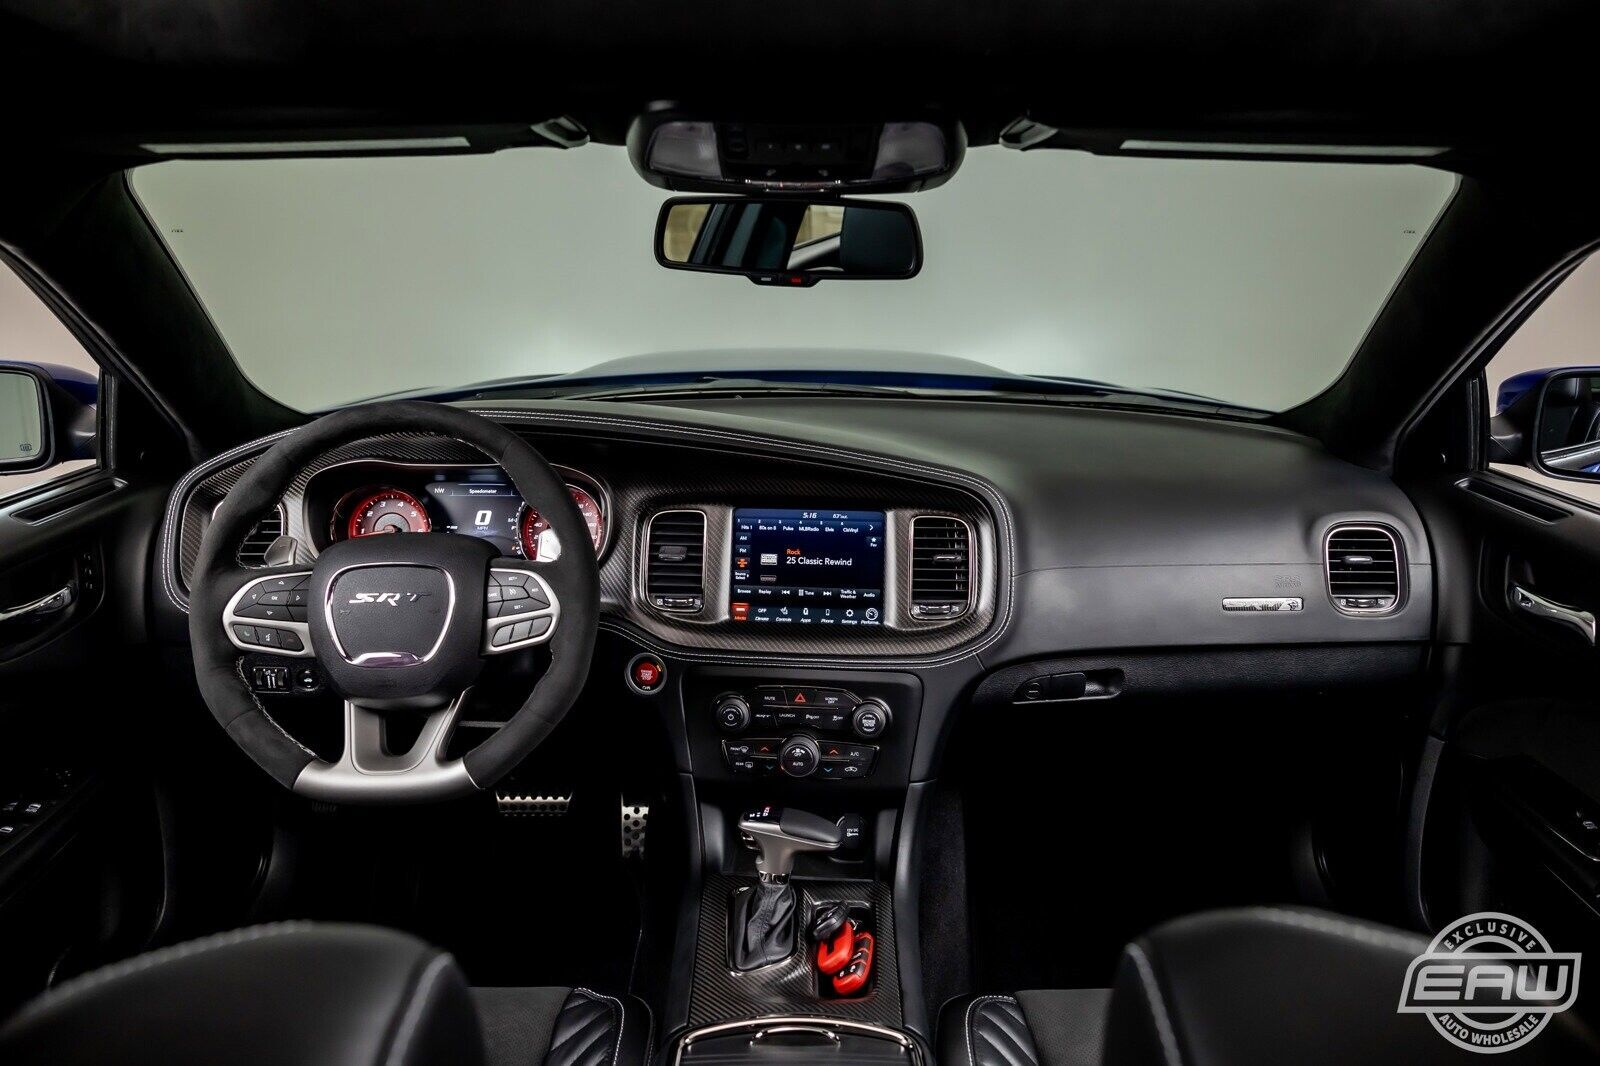 2022 Dodge Charger SRT Hellcat Widebody 48 Miles Indigo Blue 4dr Car Intercooled